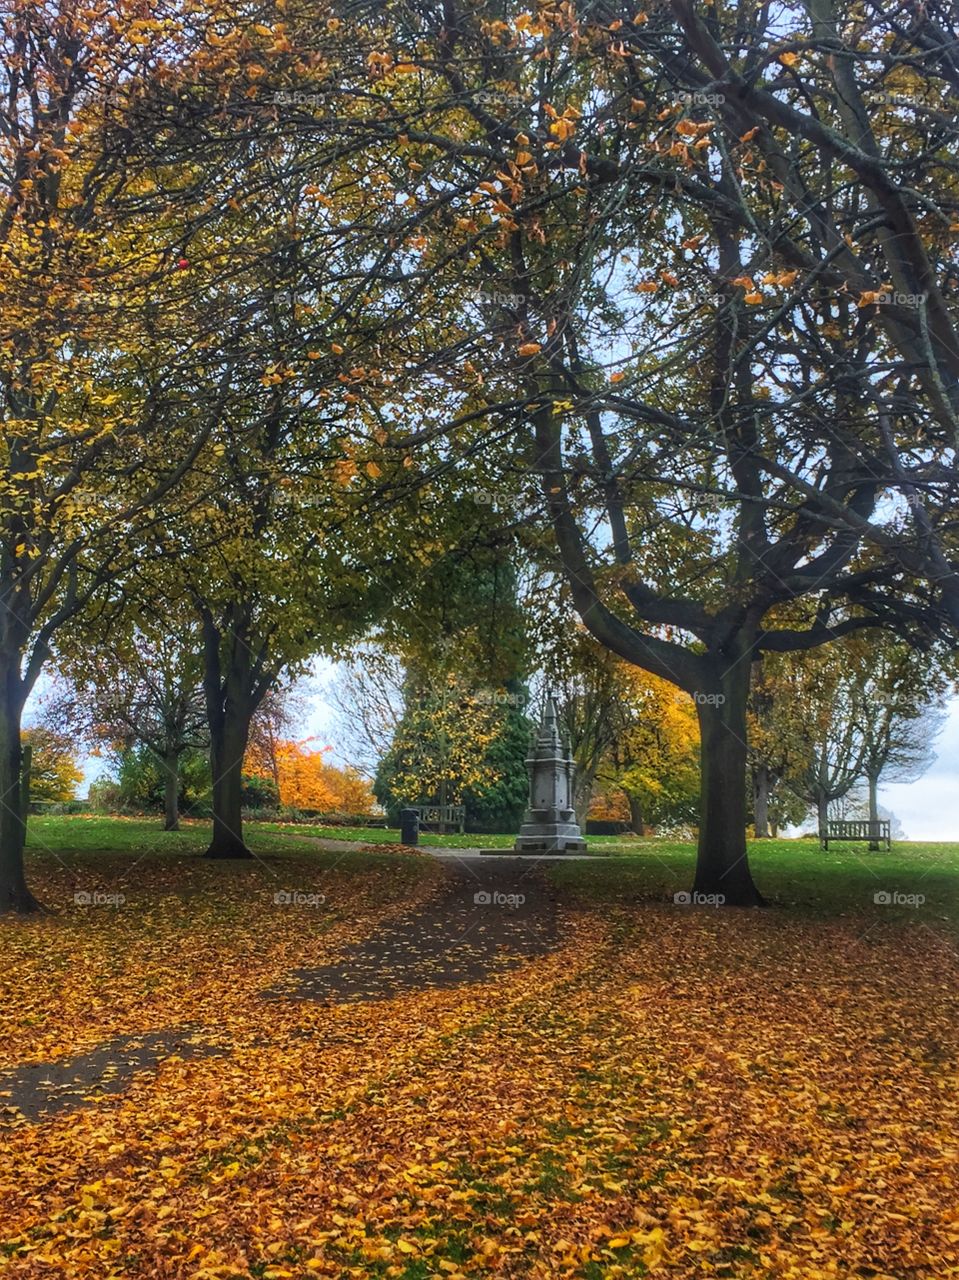 Autumn walks in the park